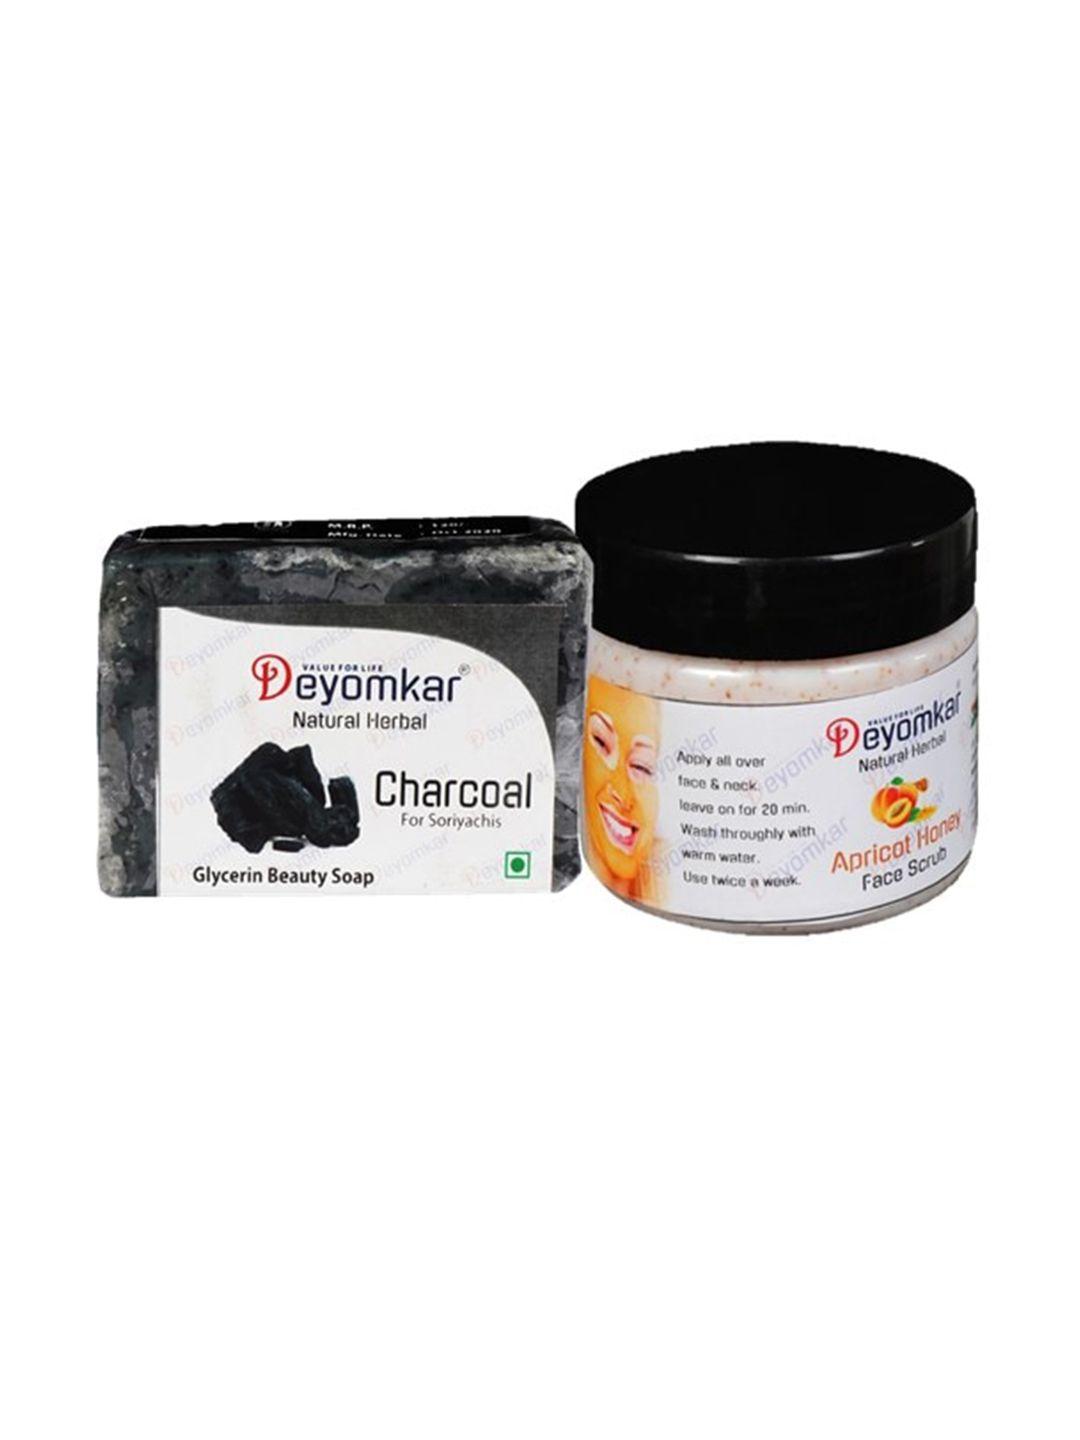 deyomkar herbal apricot honey scrub & charcoal soap combo